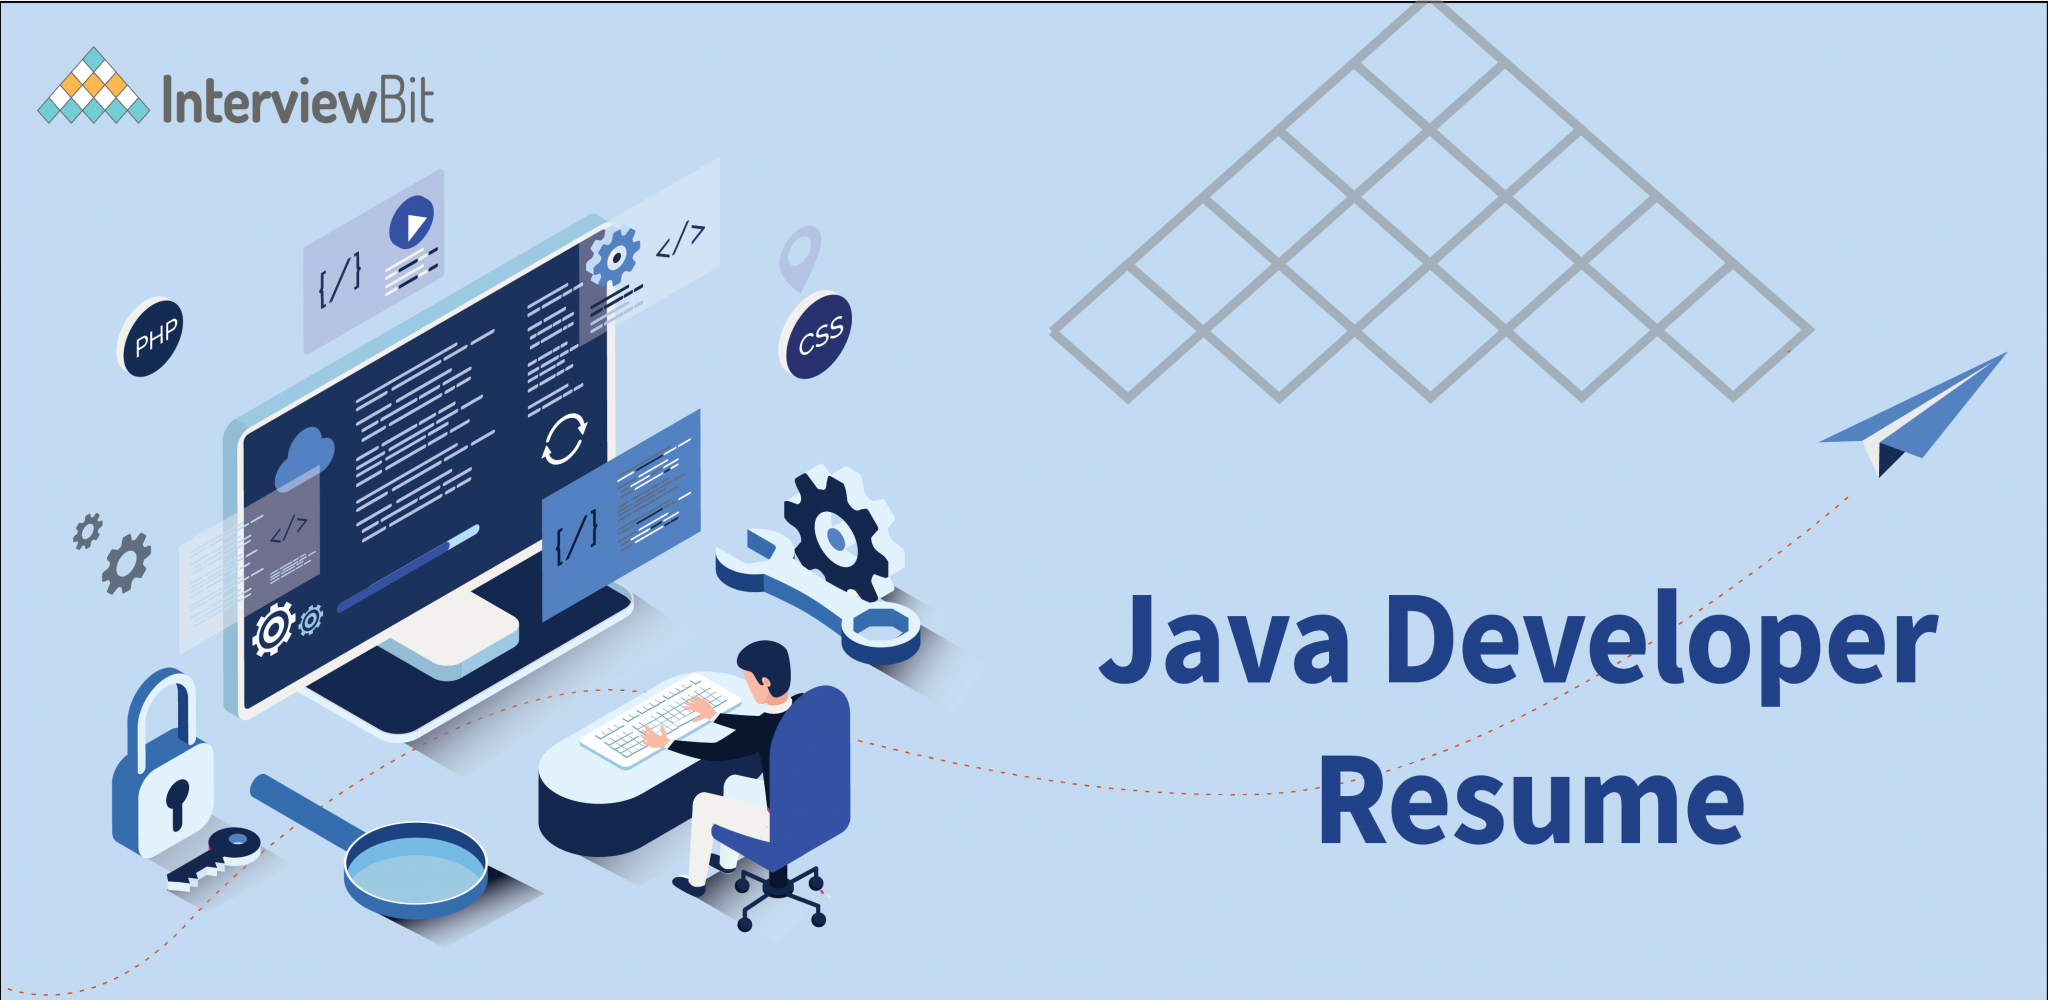 Java Developer Resume - Full Guide and Example - InterviewBit